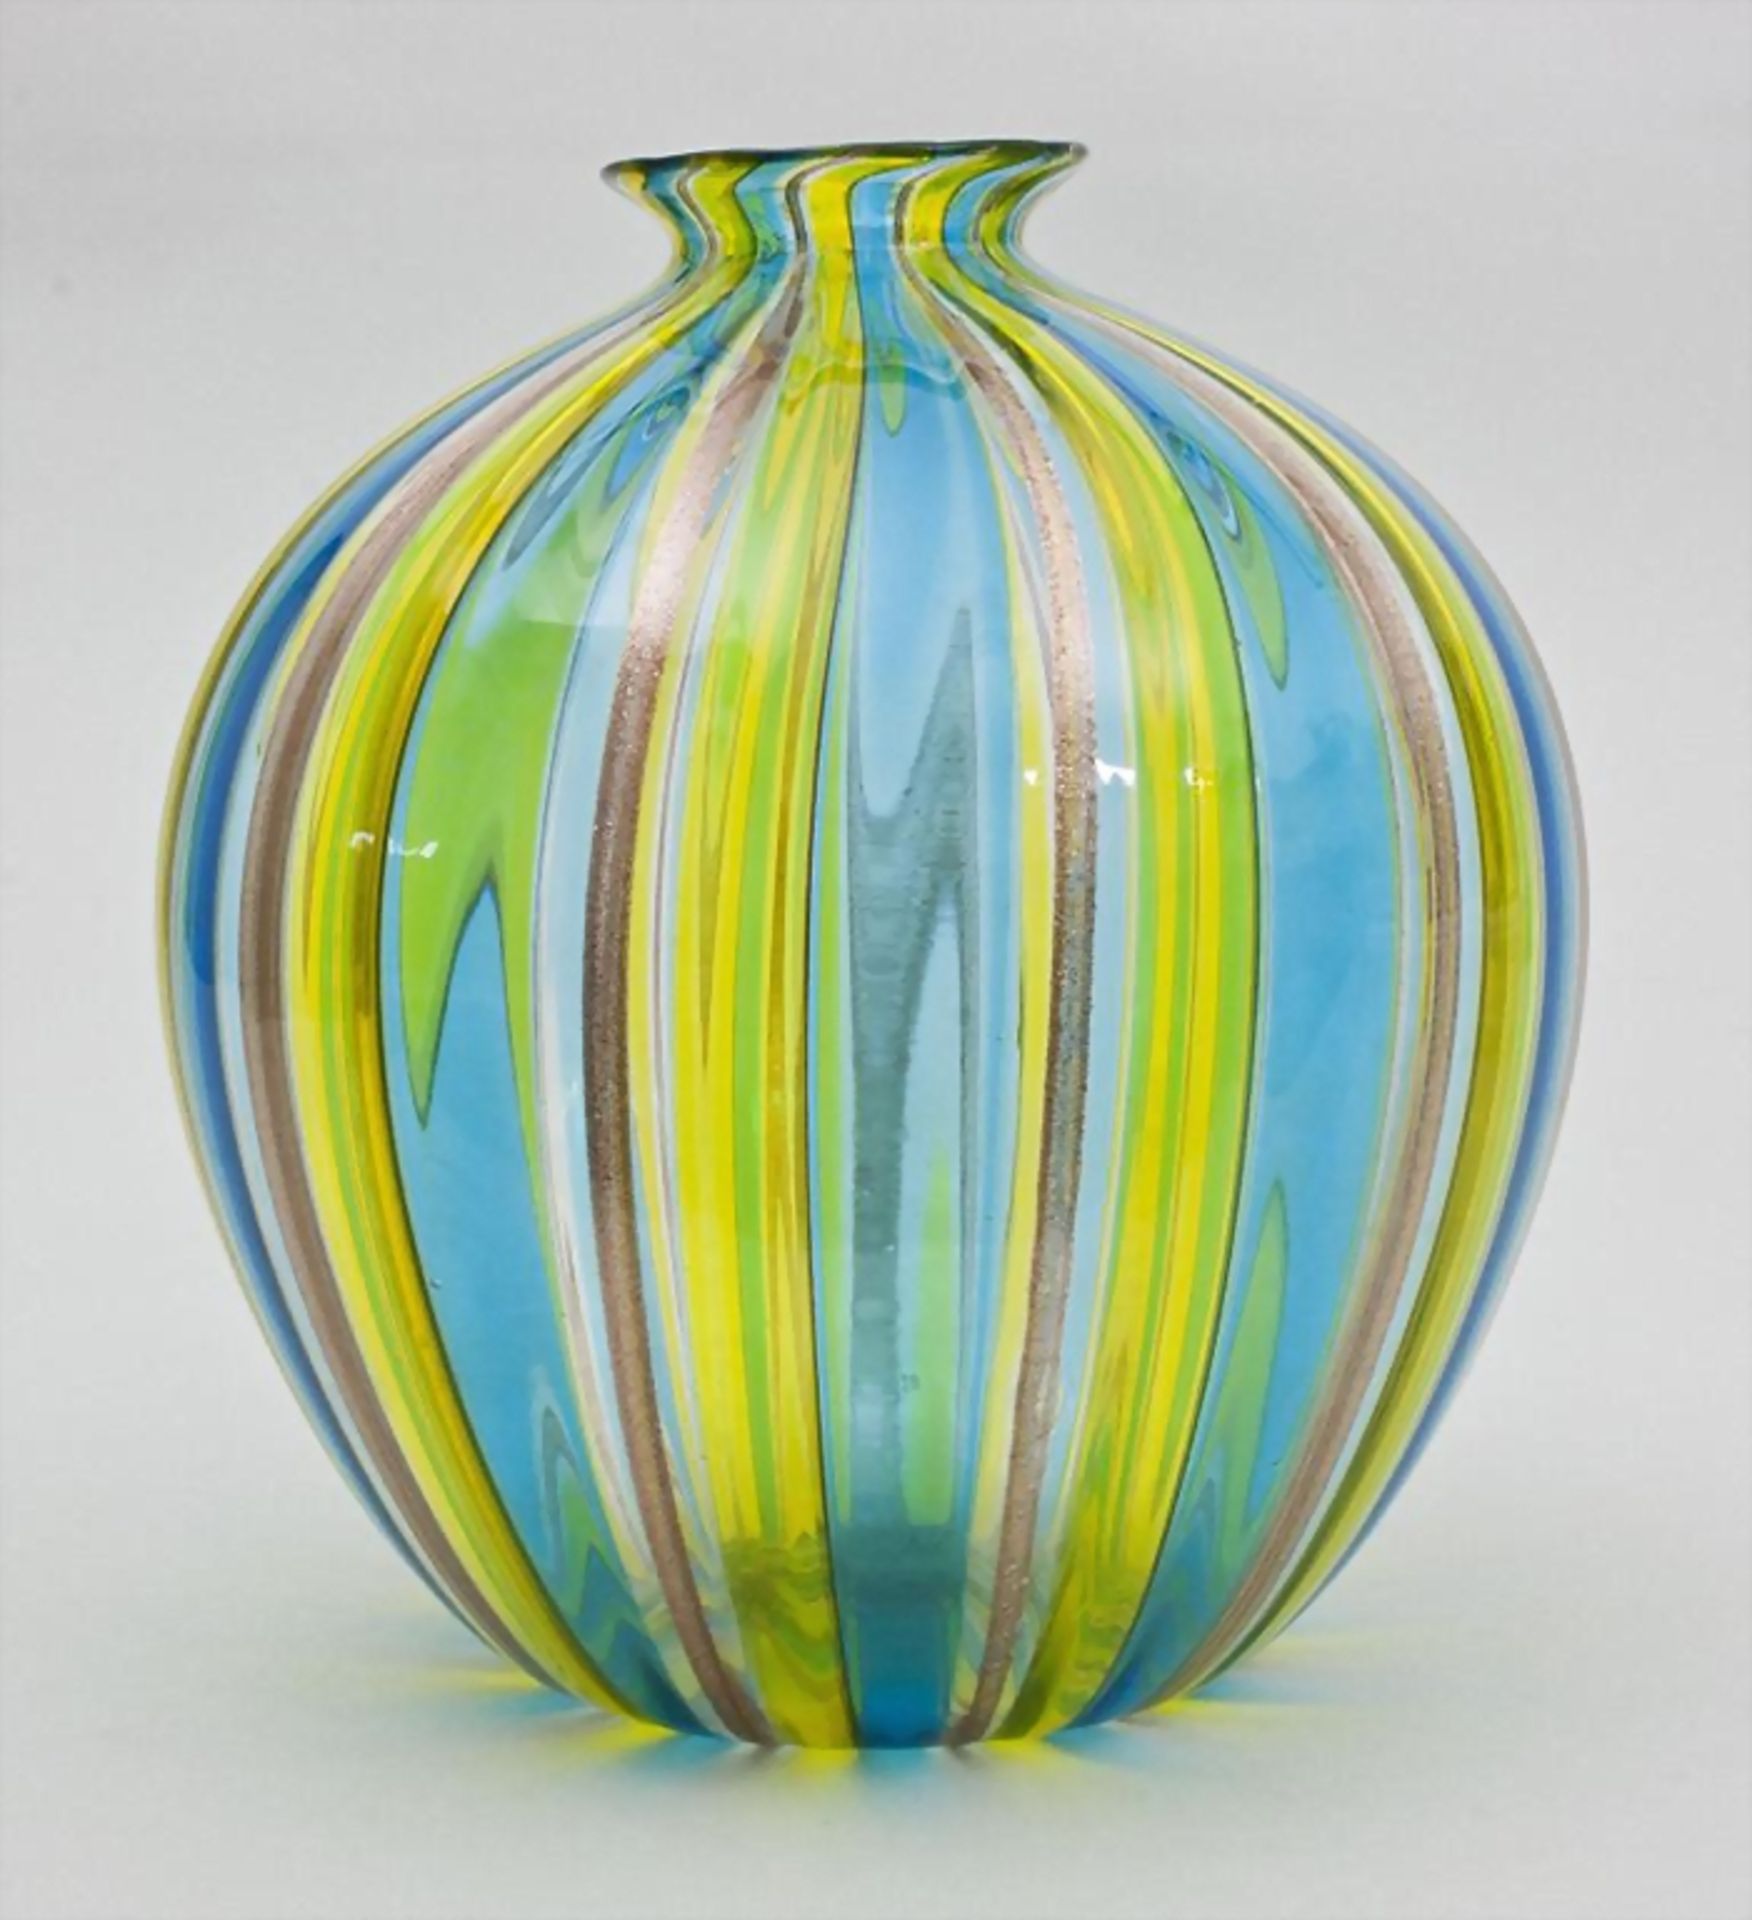 Kugelvase 'a canne' / A Spherical Vase, wohl Venini, Murano, Italien, um 1950bauchiger